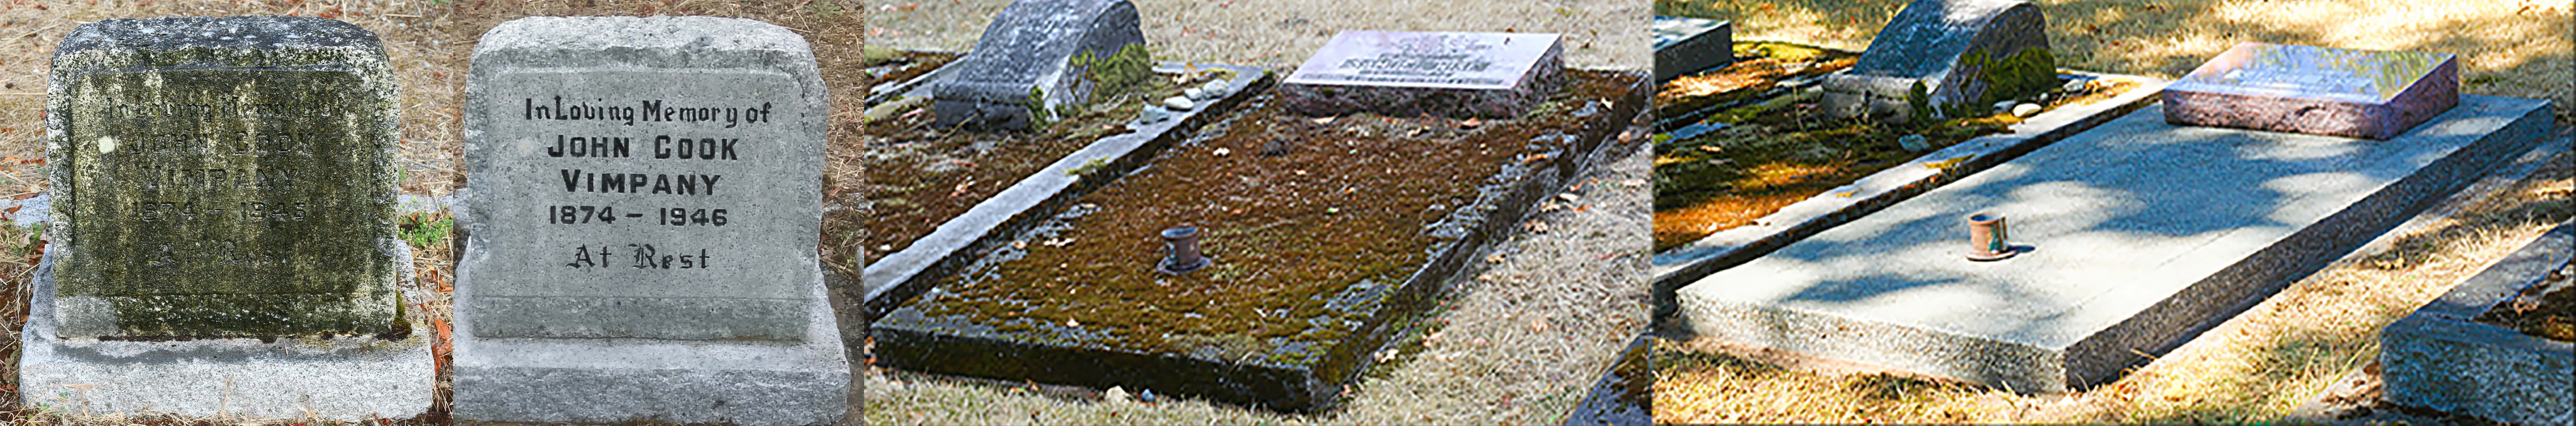 Headstone Lettering Restoration